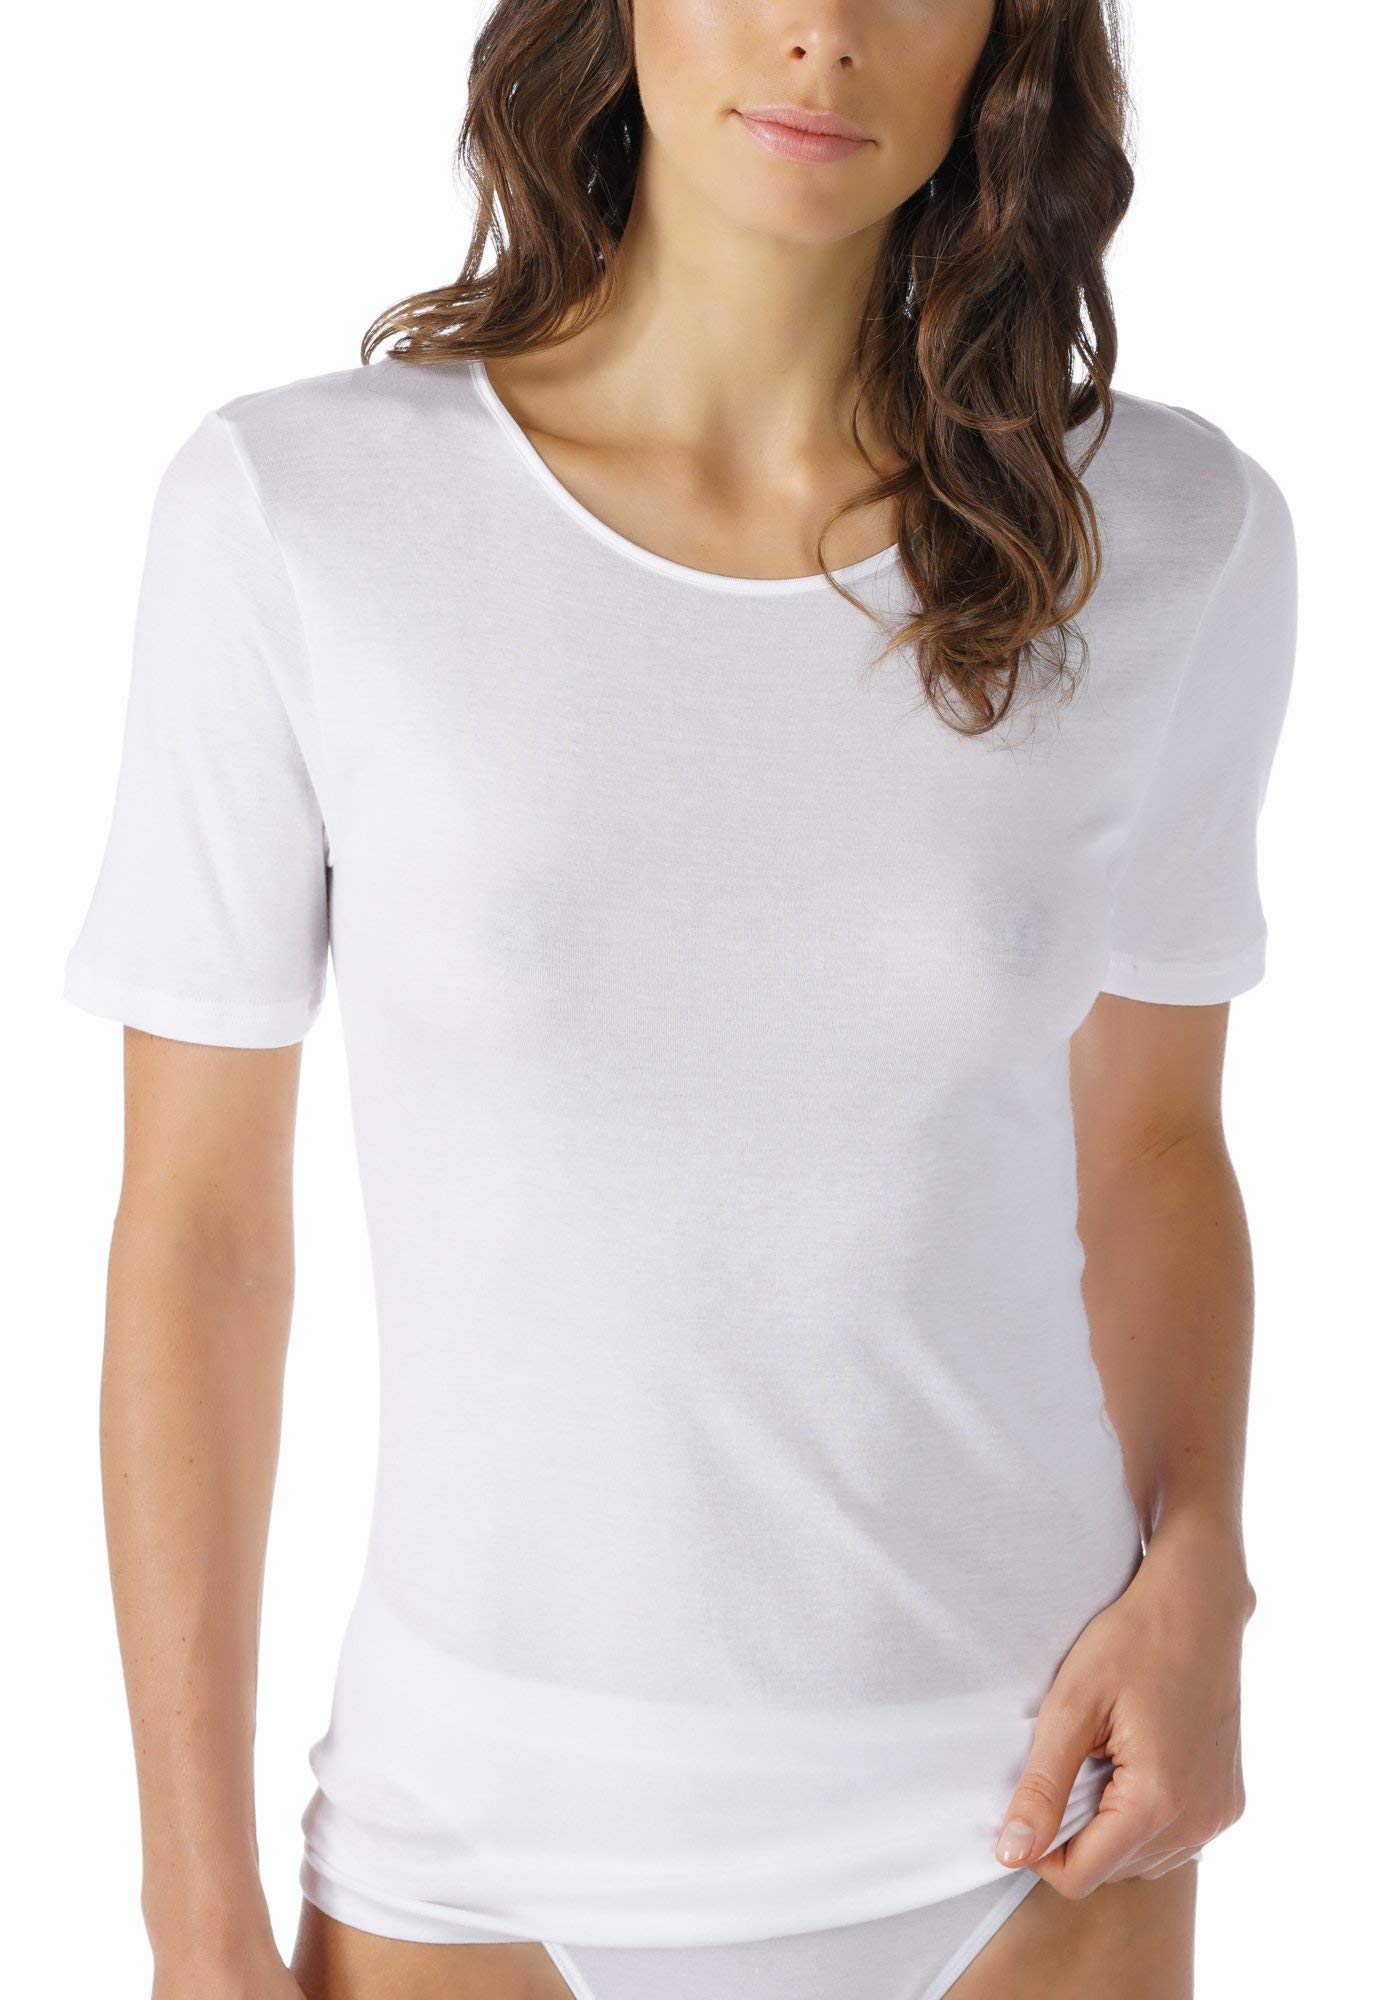 Mey Tagwäsche Serie Noblesse Damen Shirts 1/2 Arm Weiss XL(44)